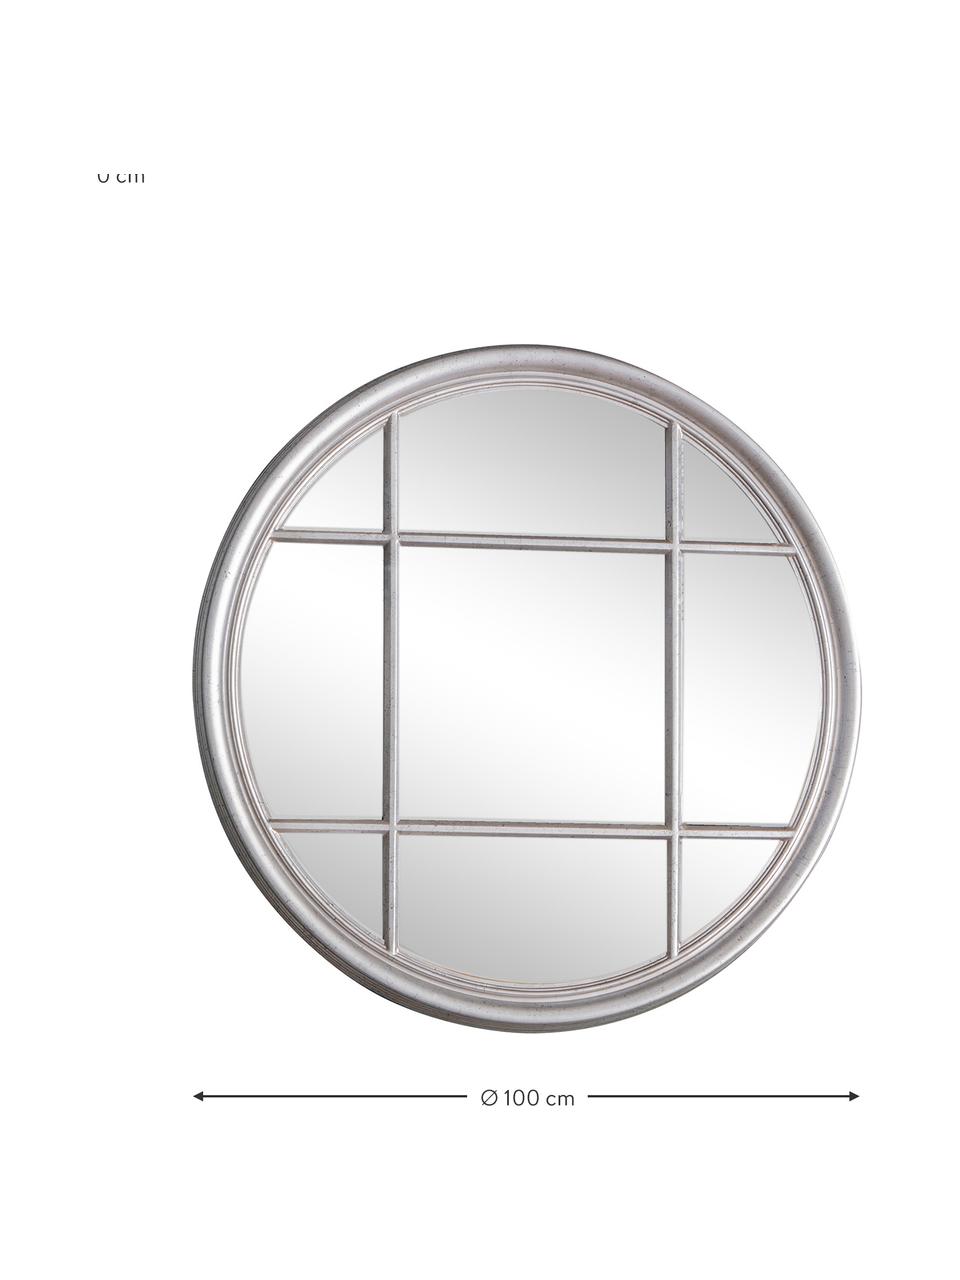 Kulaté nástěnné zrcadlo Eccleston, Stříbrná, Ø 100 cm x H 4 cm